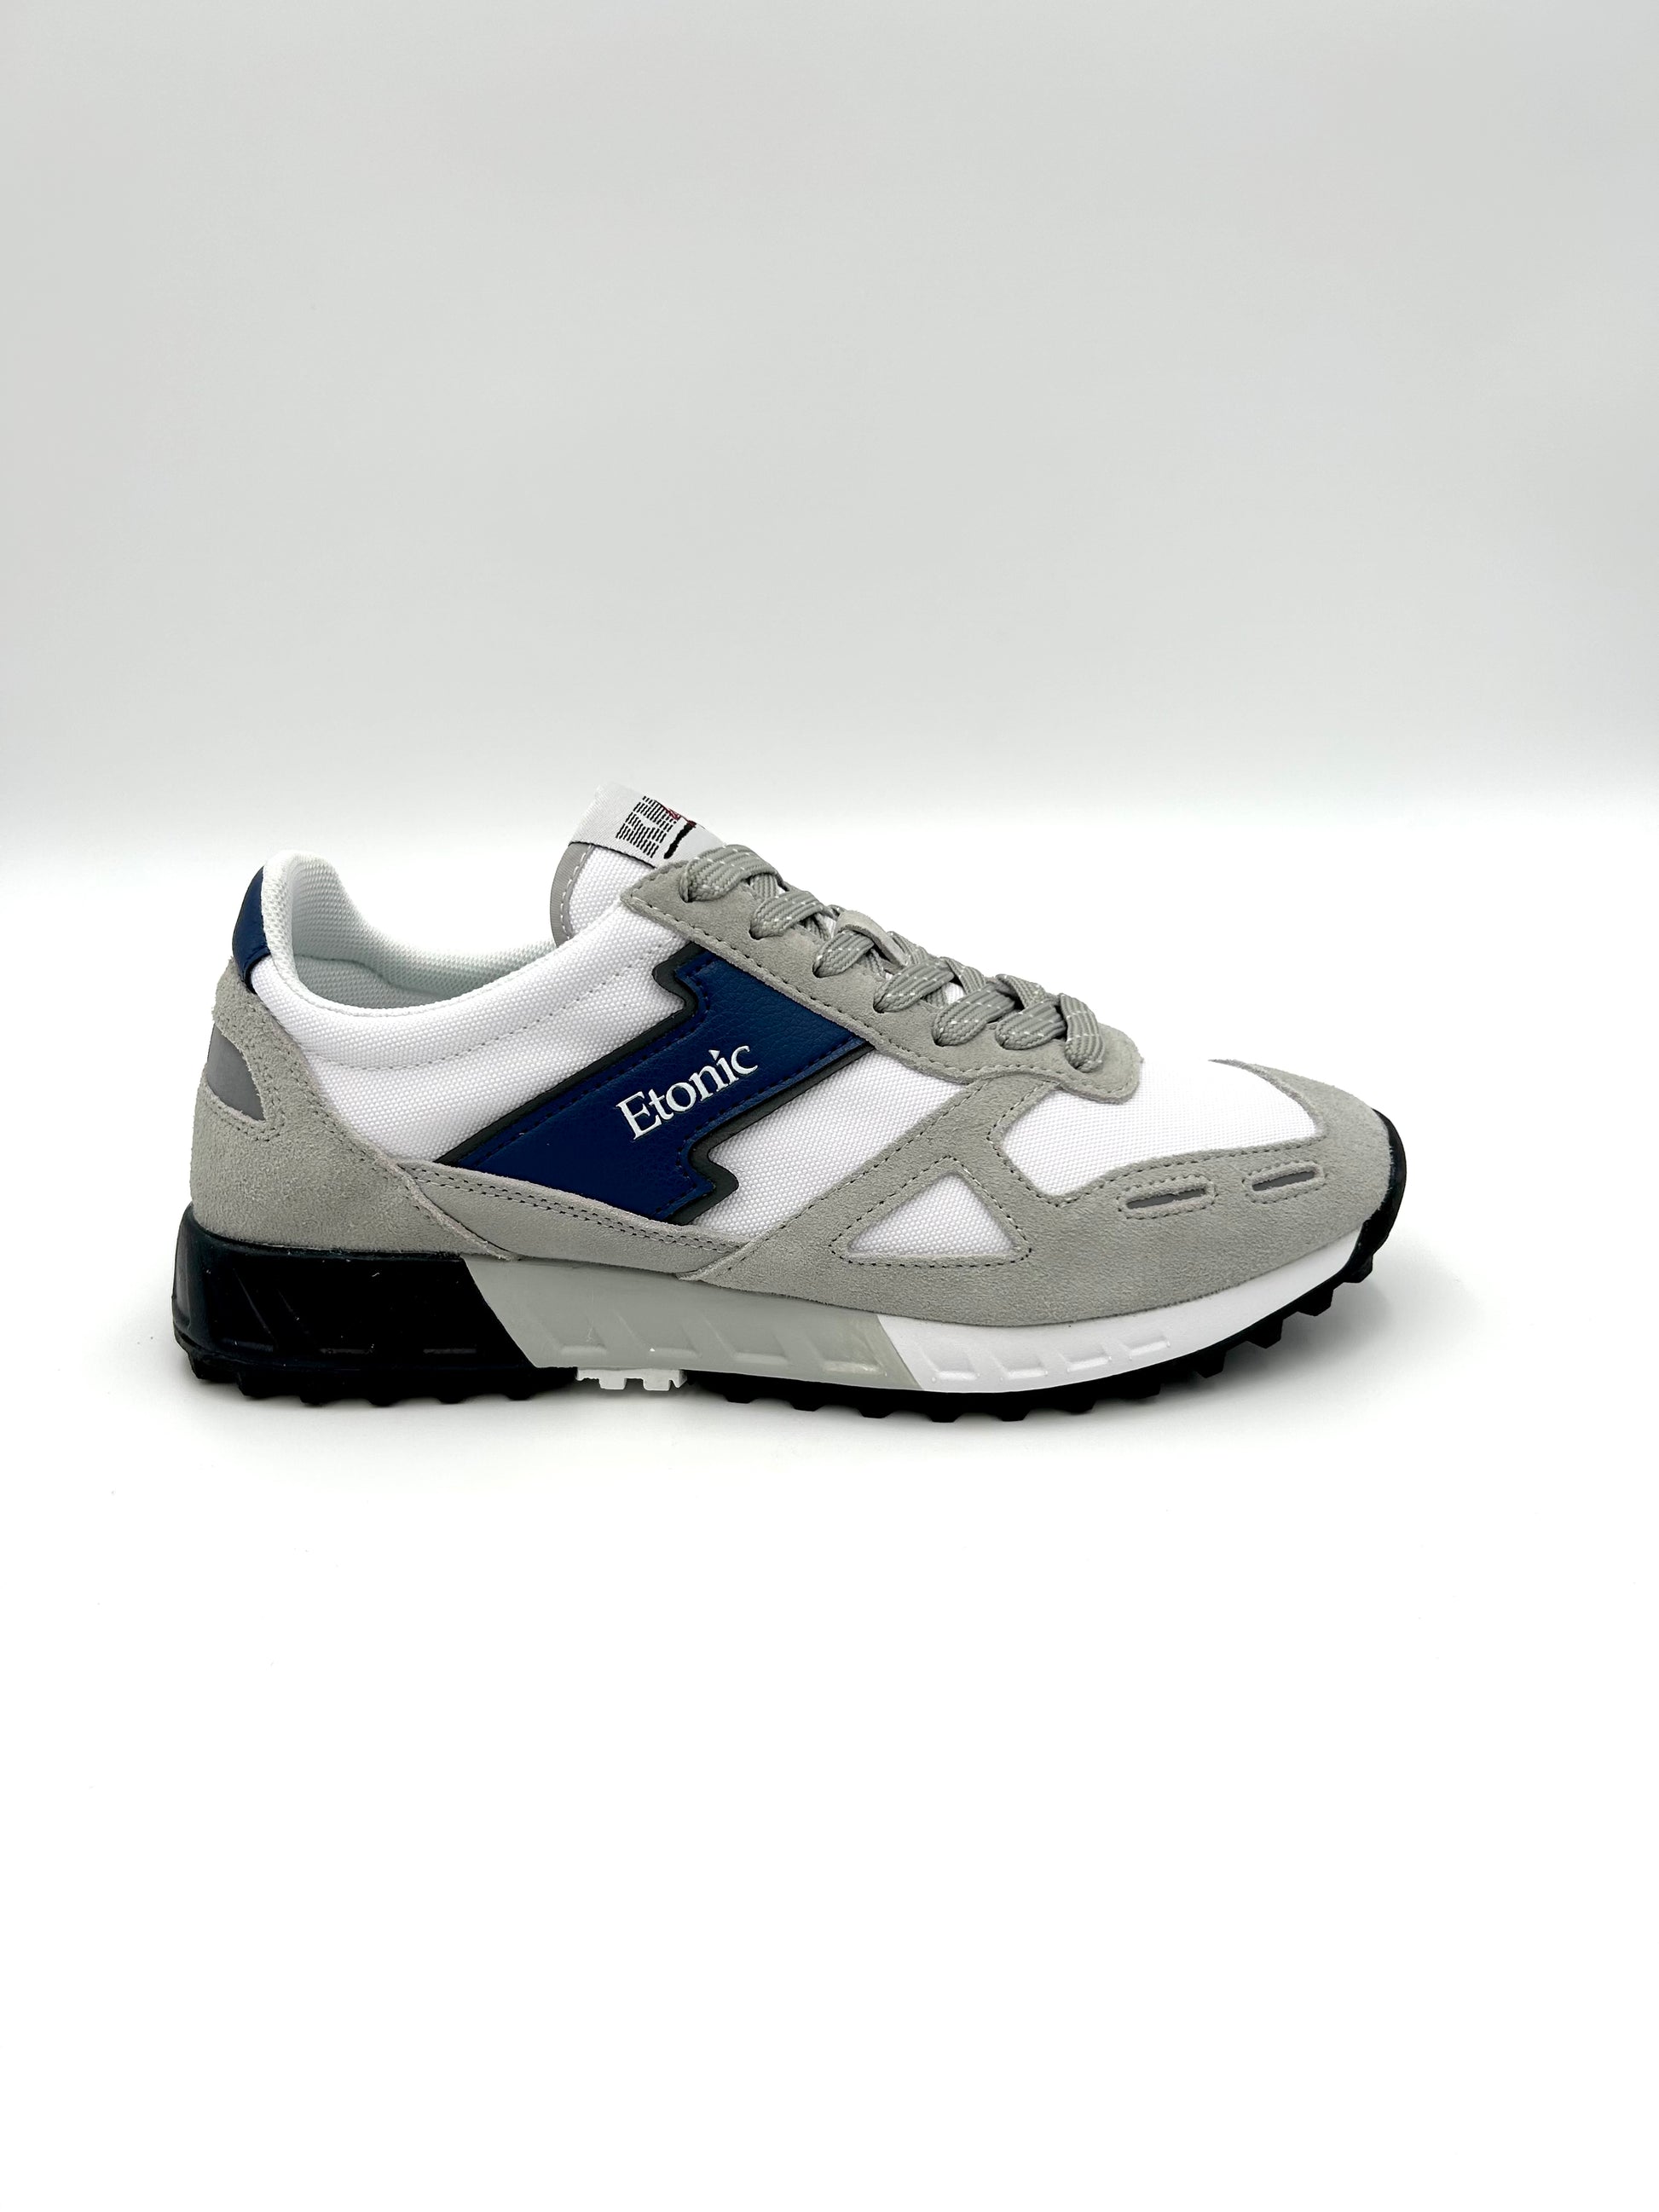 Etonic Sneakers KM 538 white and grey ETM 215605 - Etonic